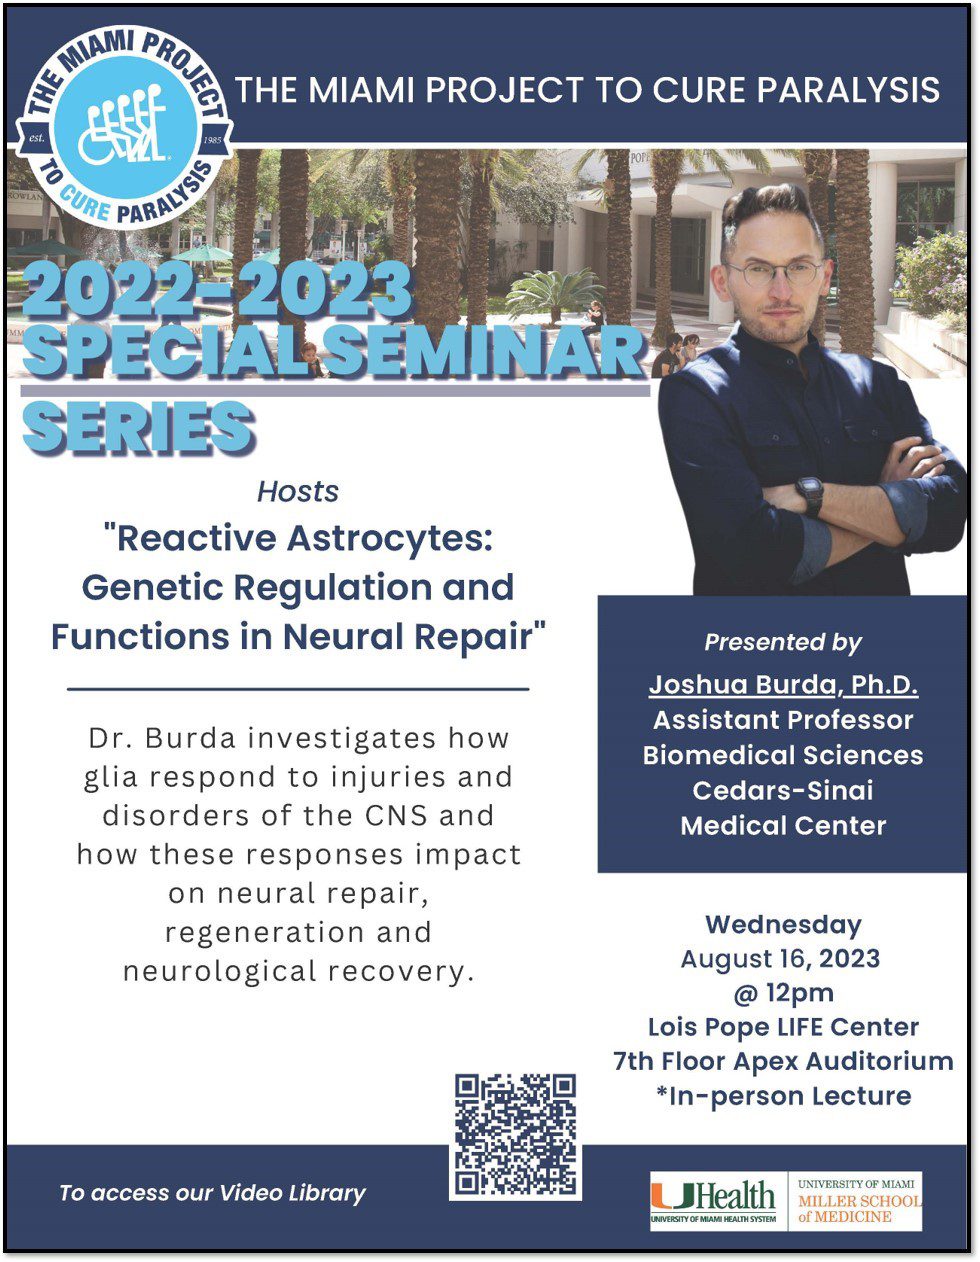 Miami Project Special Seminar Series - Joshua Burda, Ph.D.